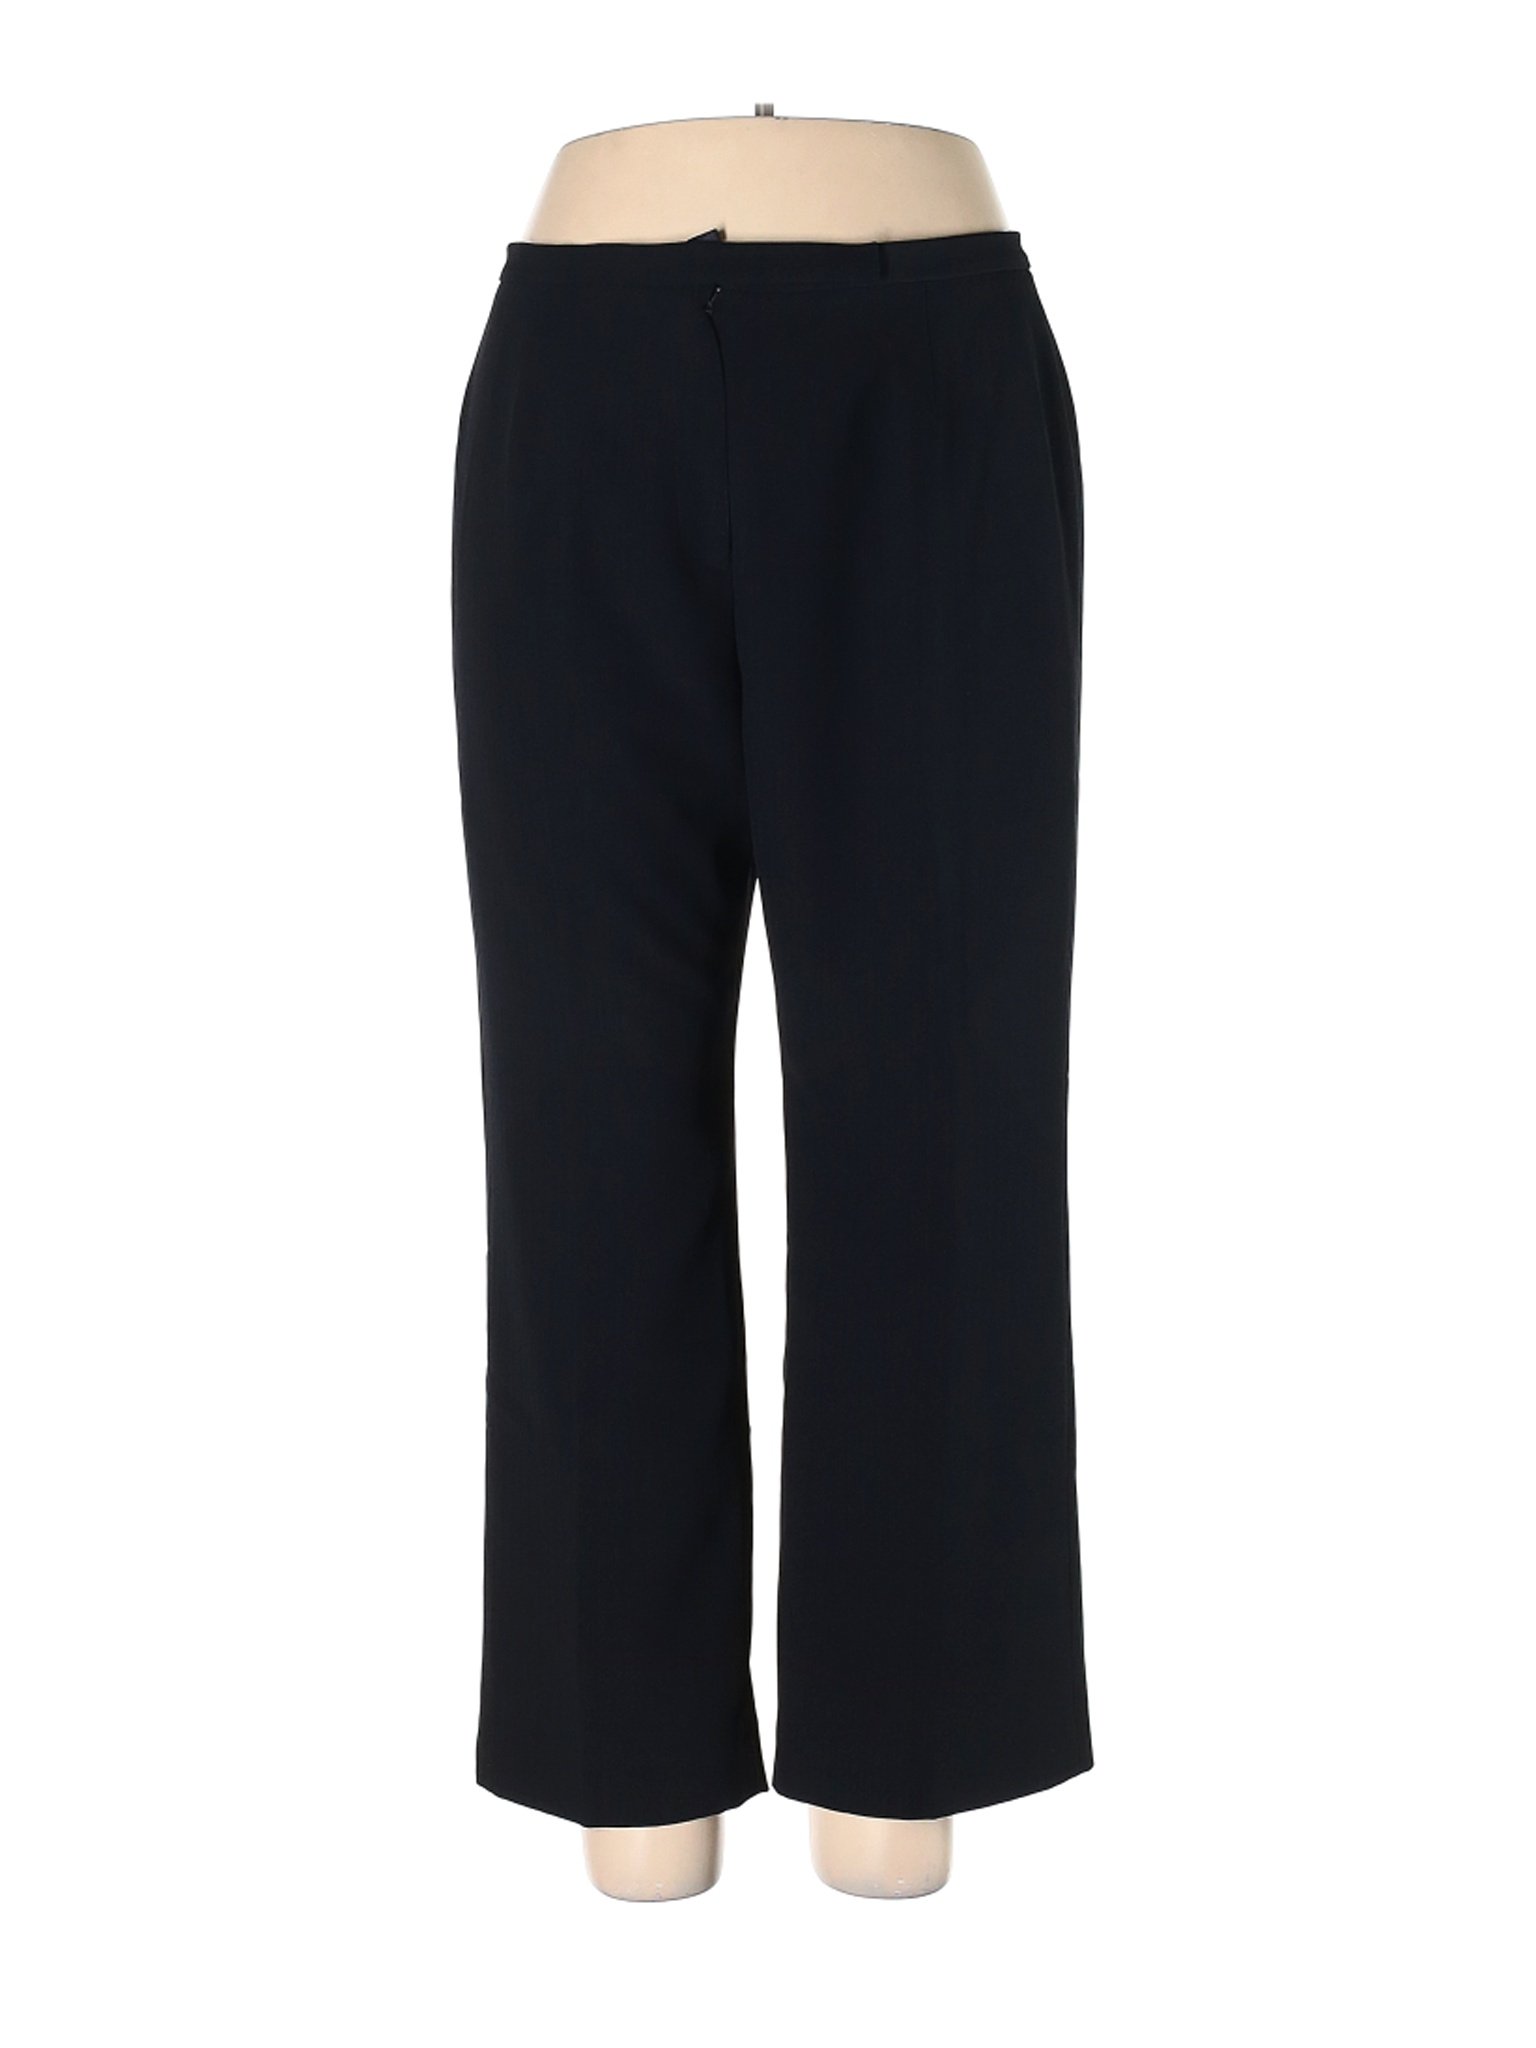 Kasper Women Black Dress Pants 16 Petites | eBay